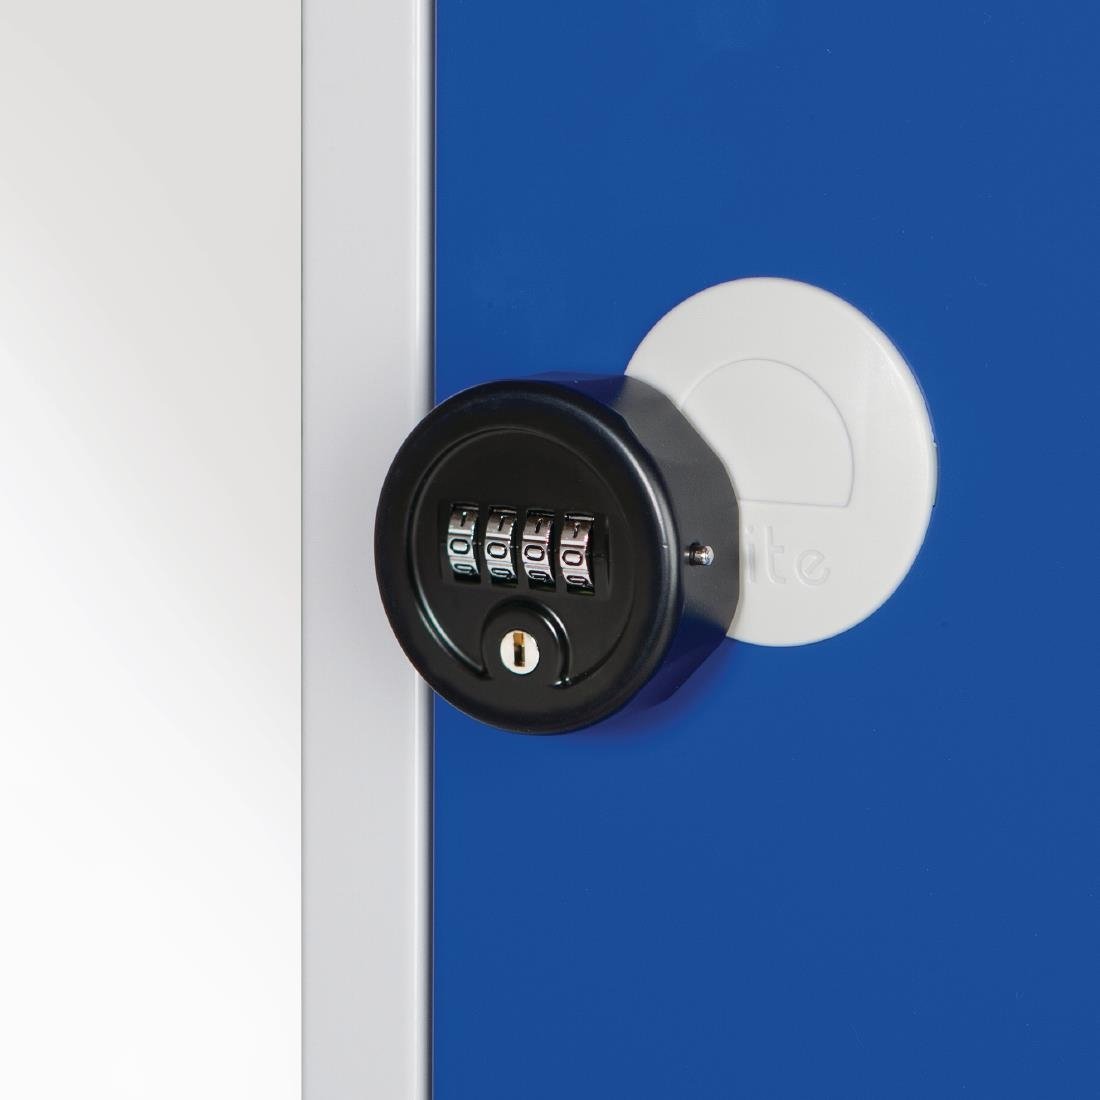 CE105-CL Elite Eight Door Manual Combination Locker Locker Grey JD Catering Equipment Solutions Ltd